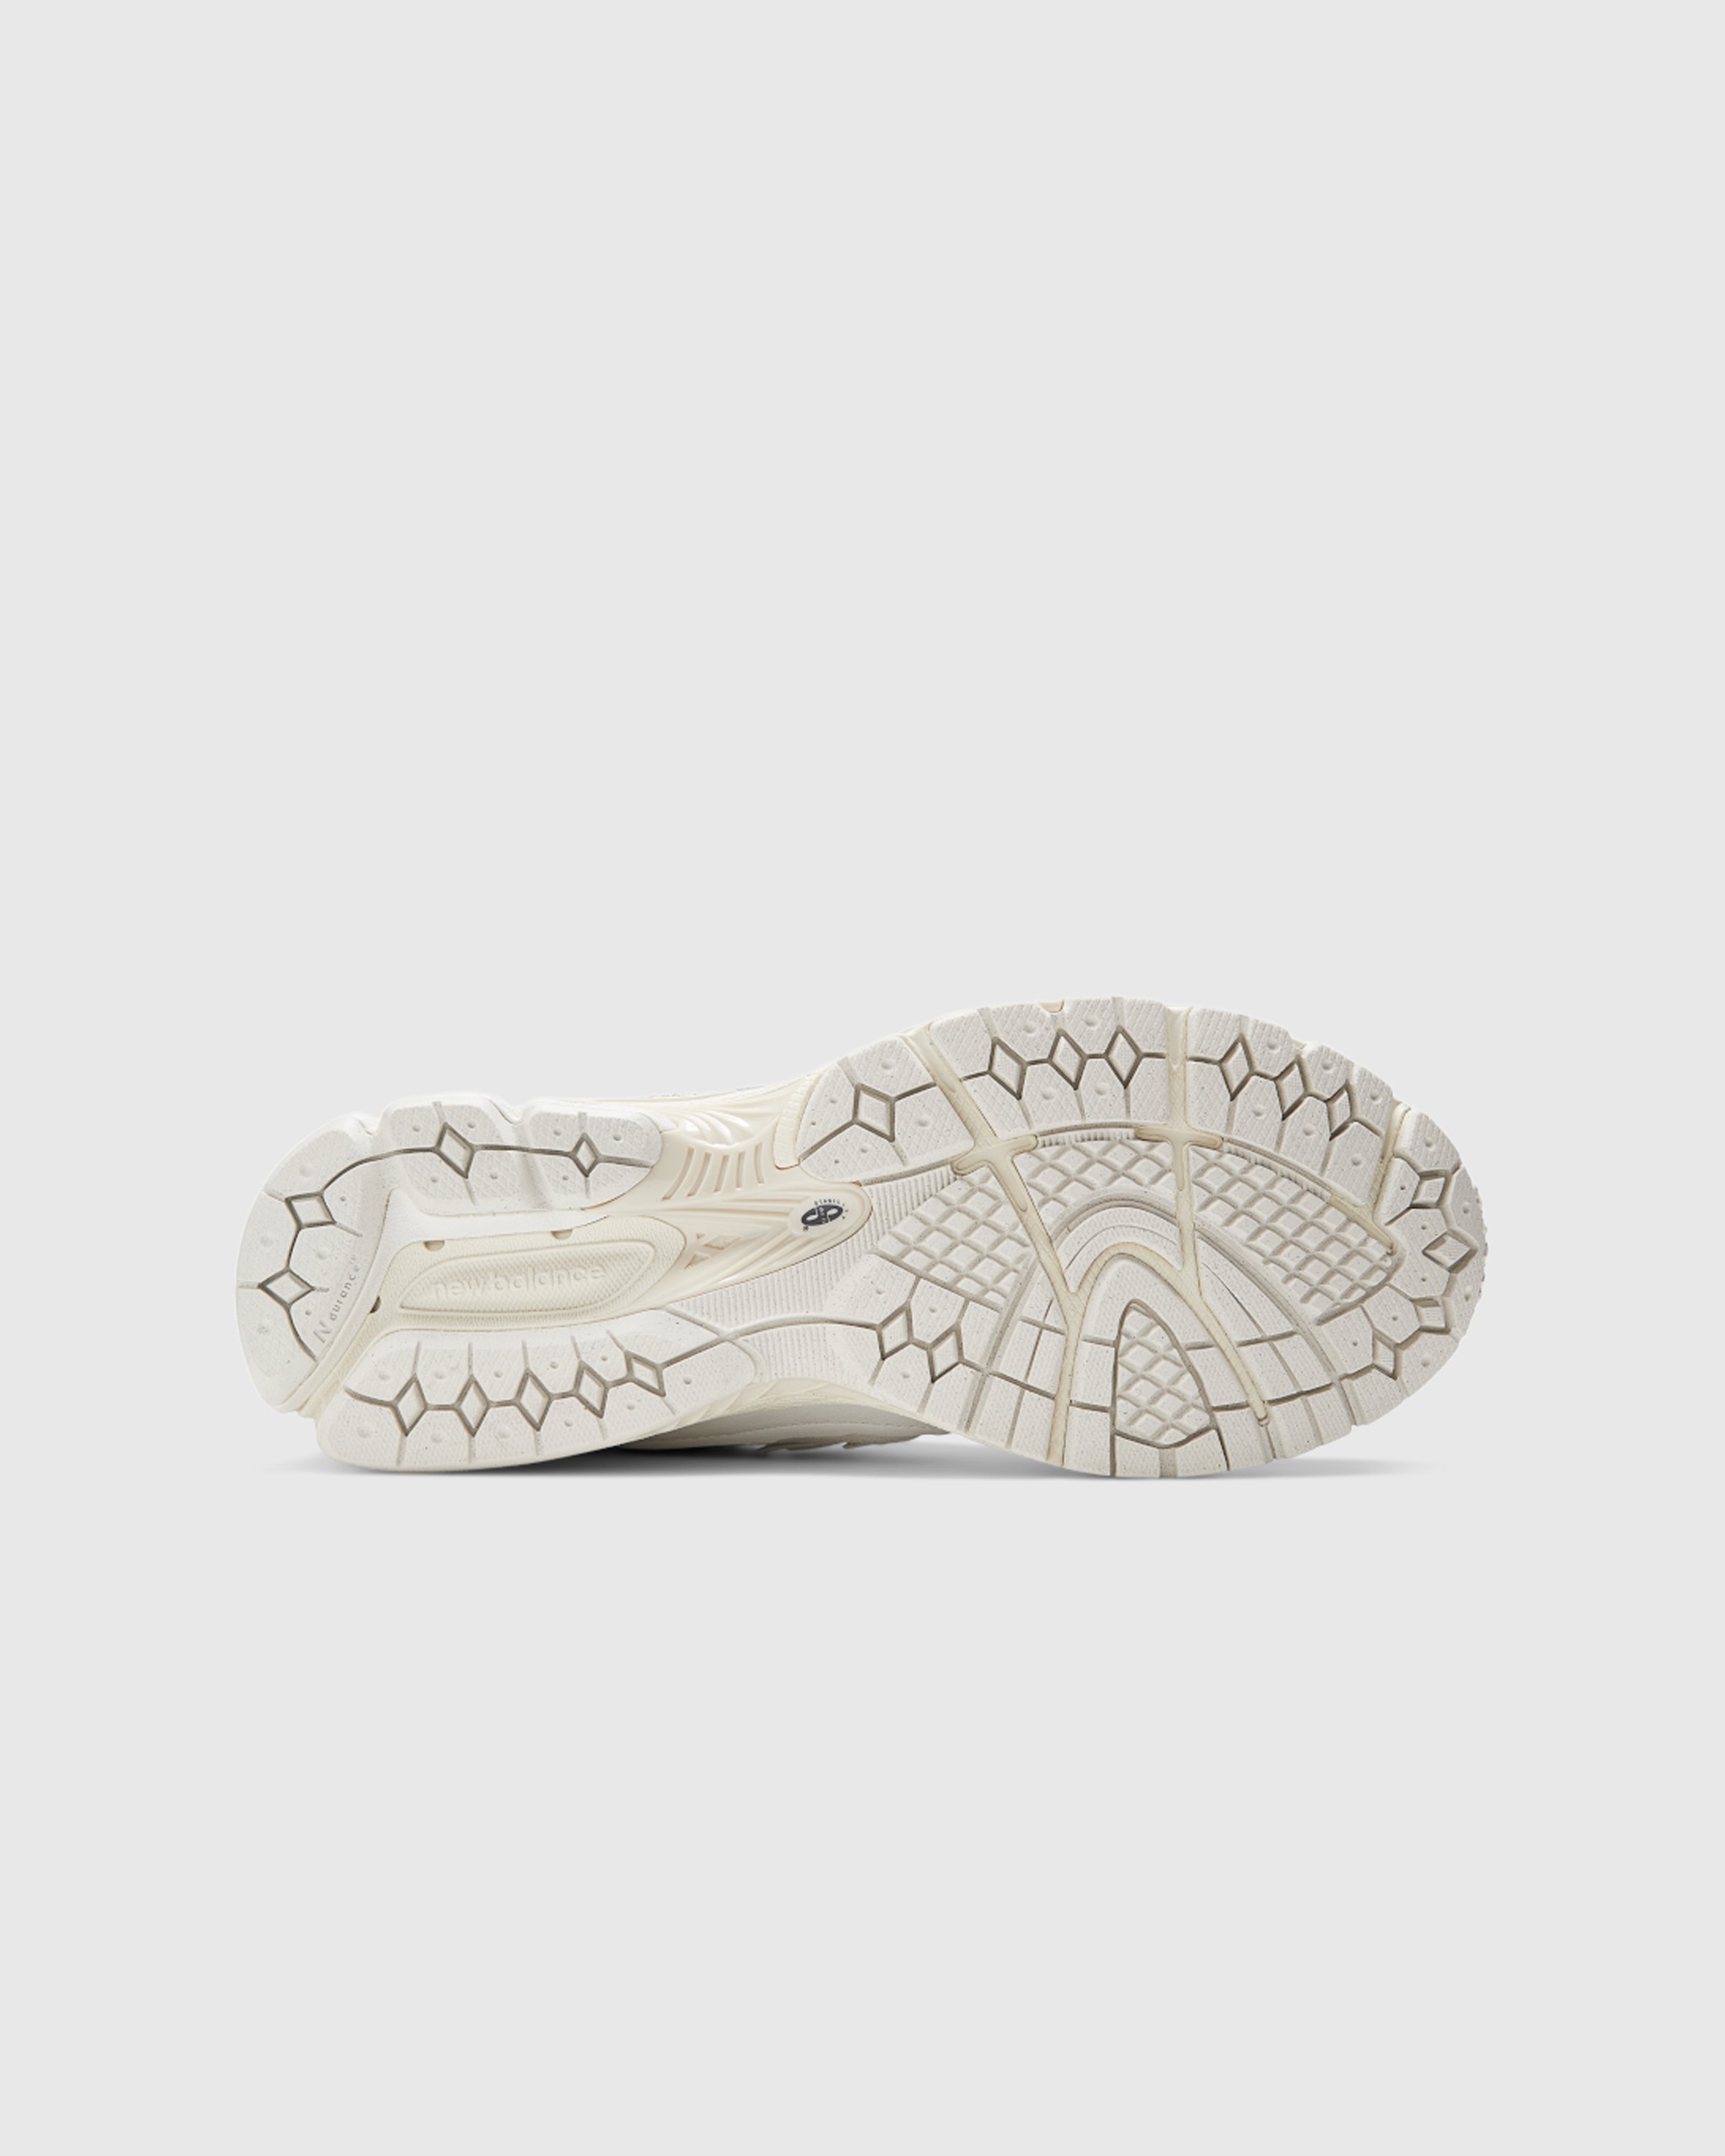 New Balance - M 1906 DE White - Footwear - White - Image 6